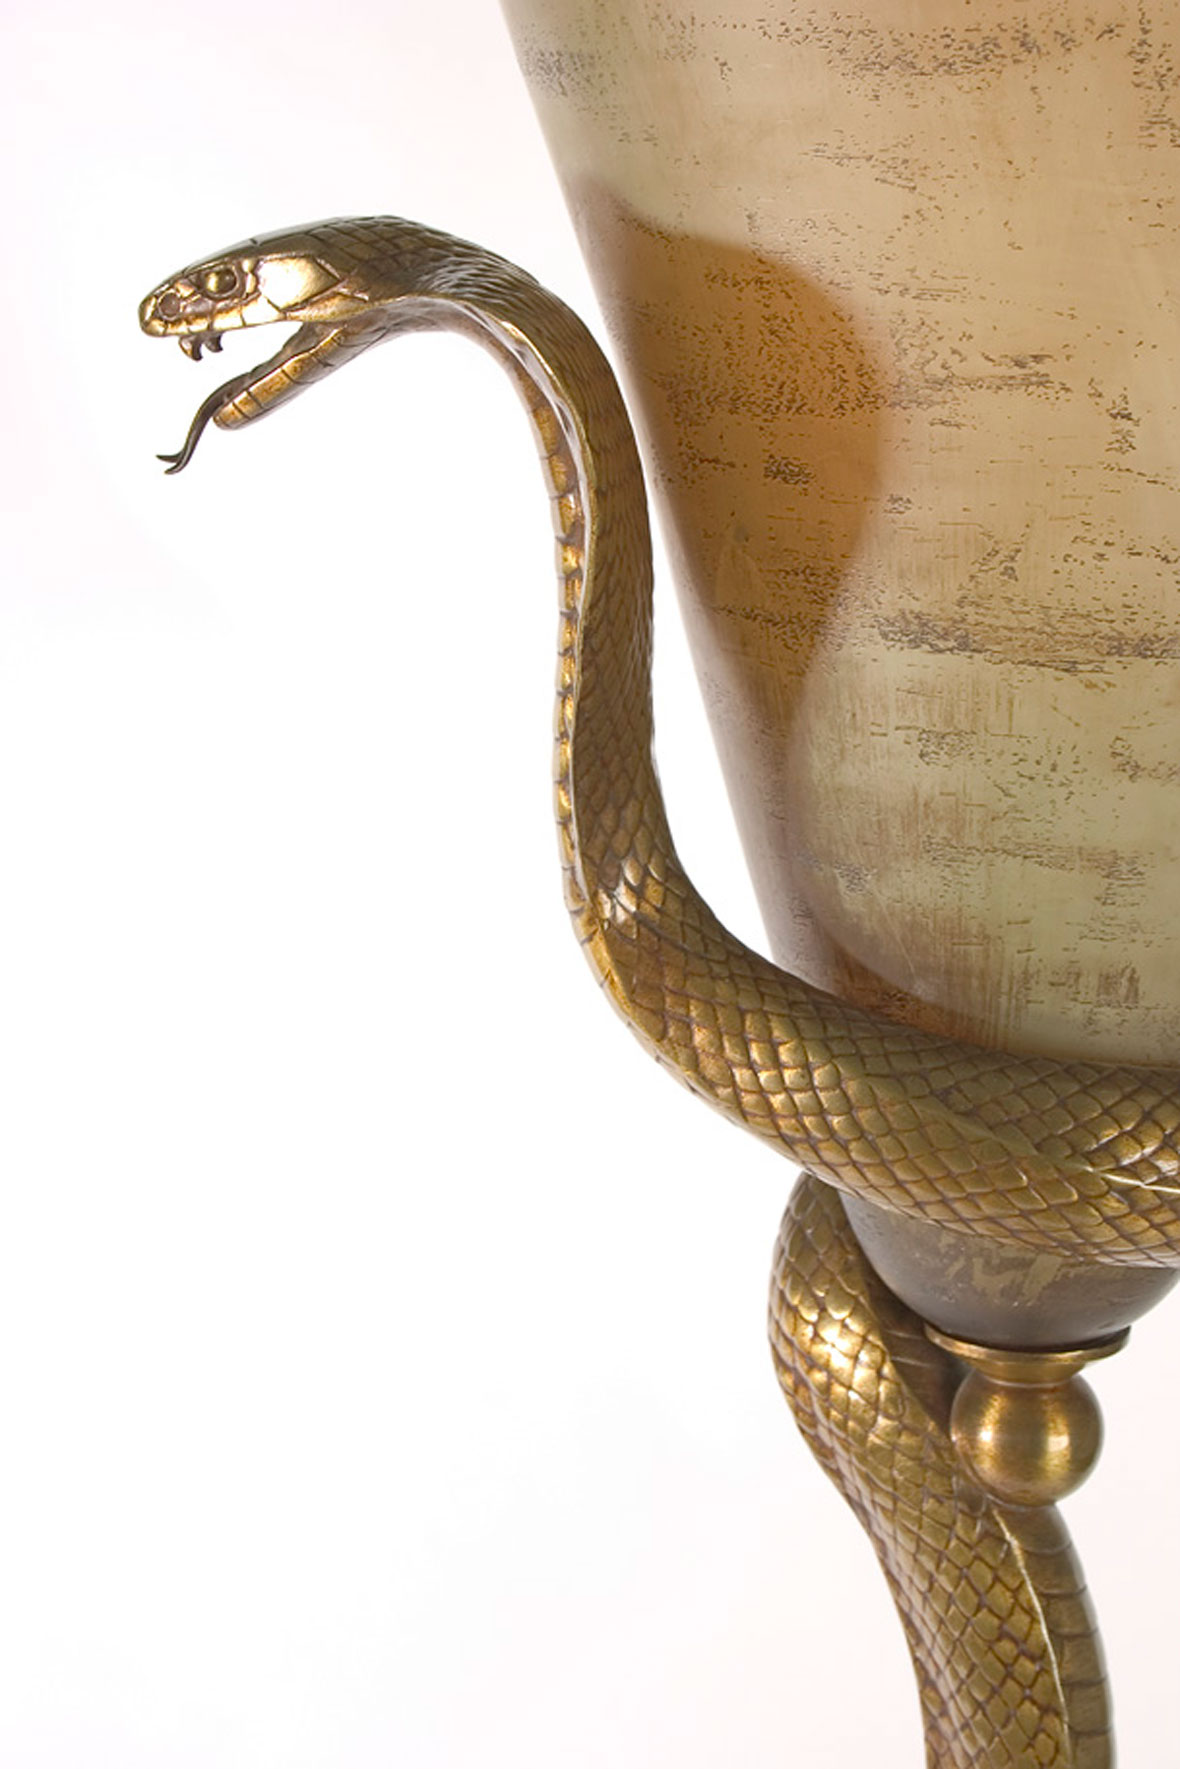 Cobra Lamp by Brandt